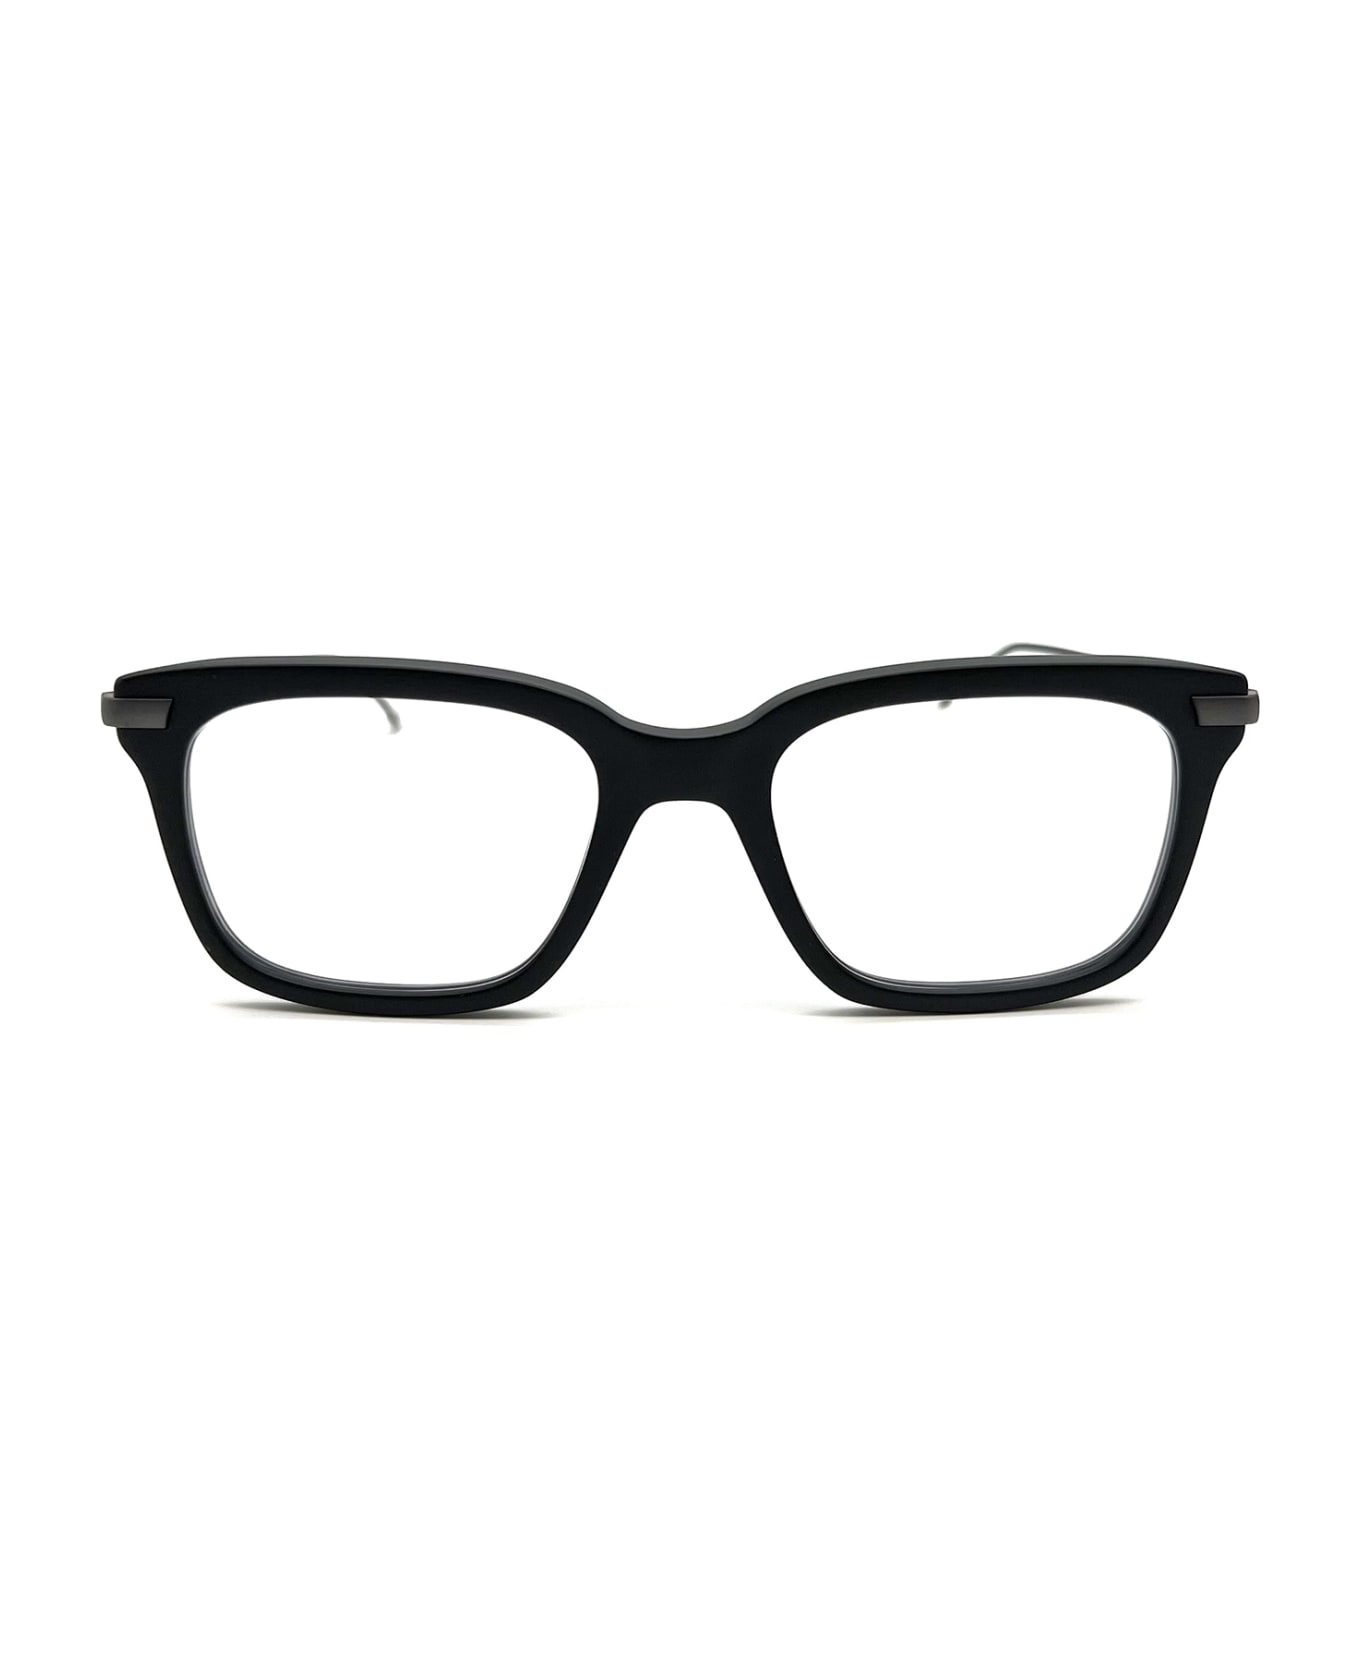 Thom Browne UEO701A/G0003 Eyewear - Black/charcoal